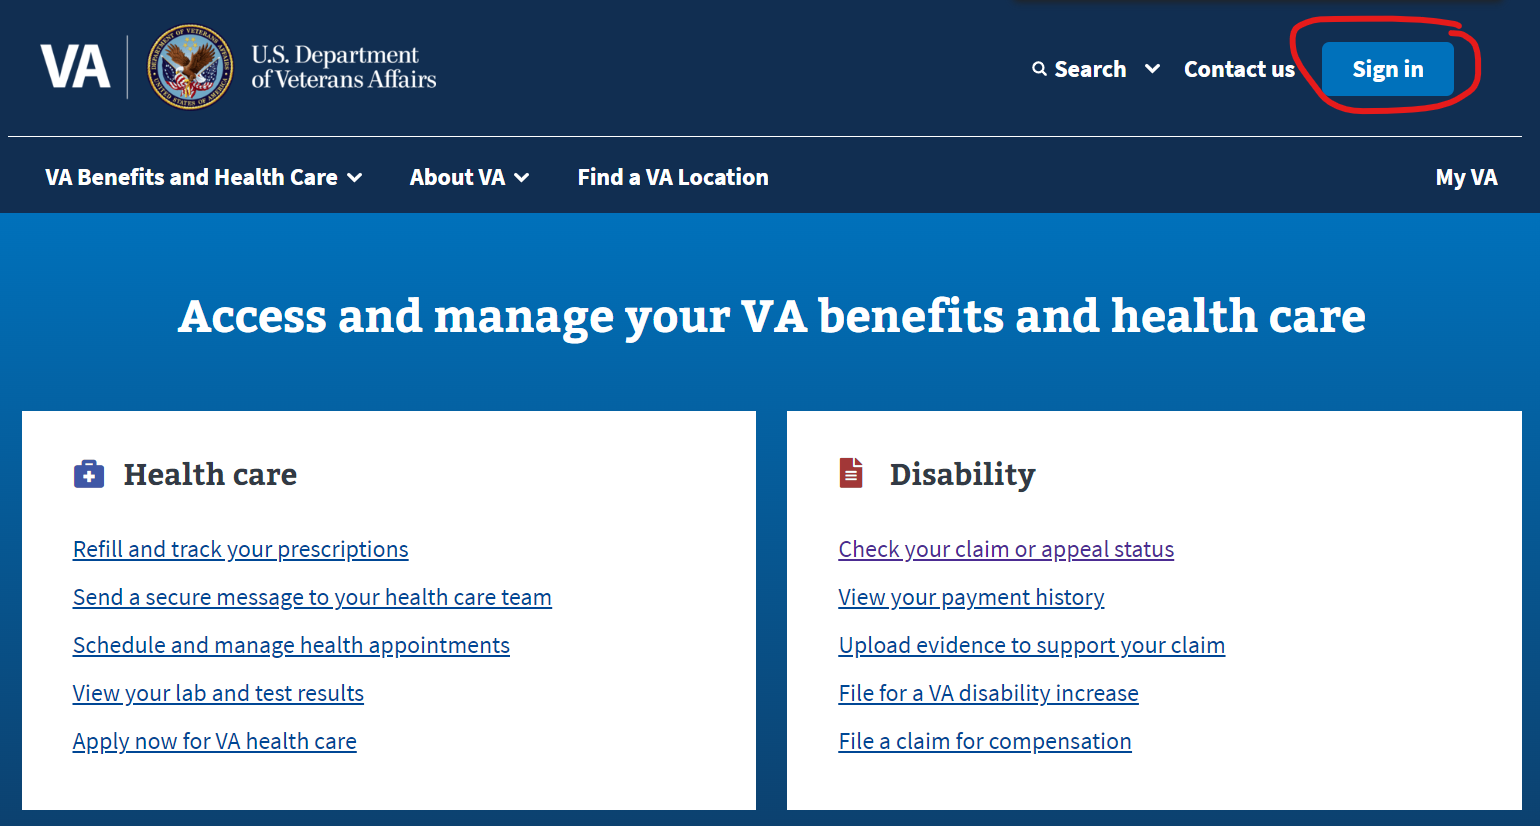 Go to VA.gov homepage